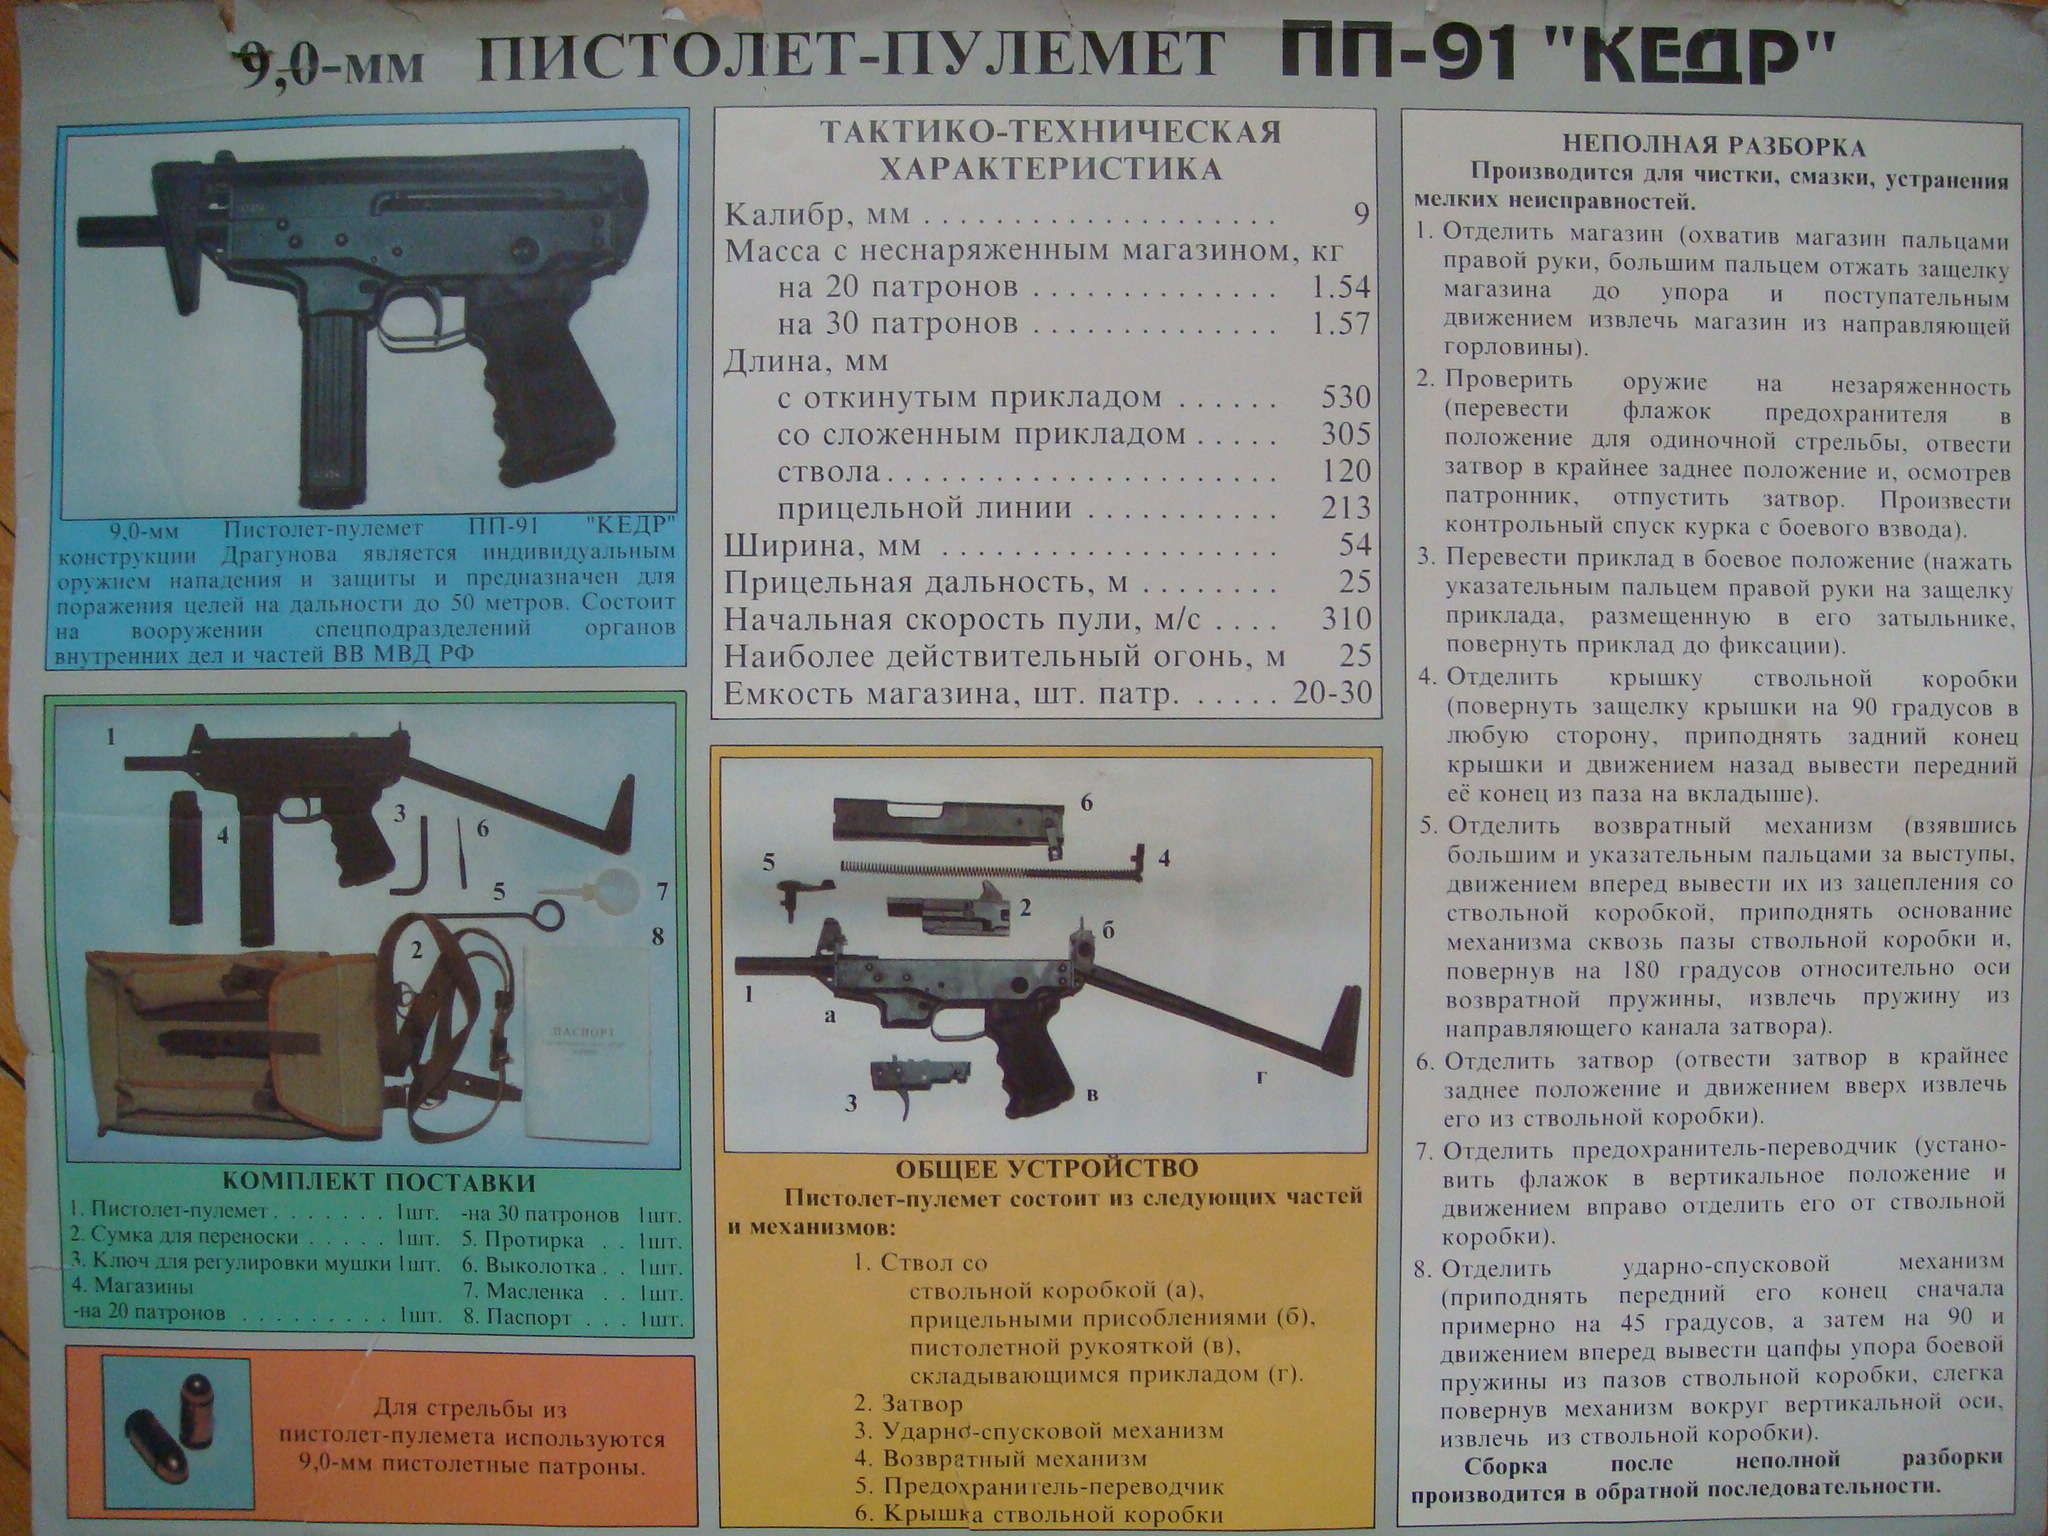 9,0 мм Пистлет пулемёт ПП - 91 "КЕДР"